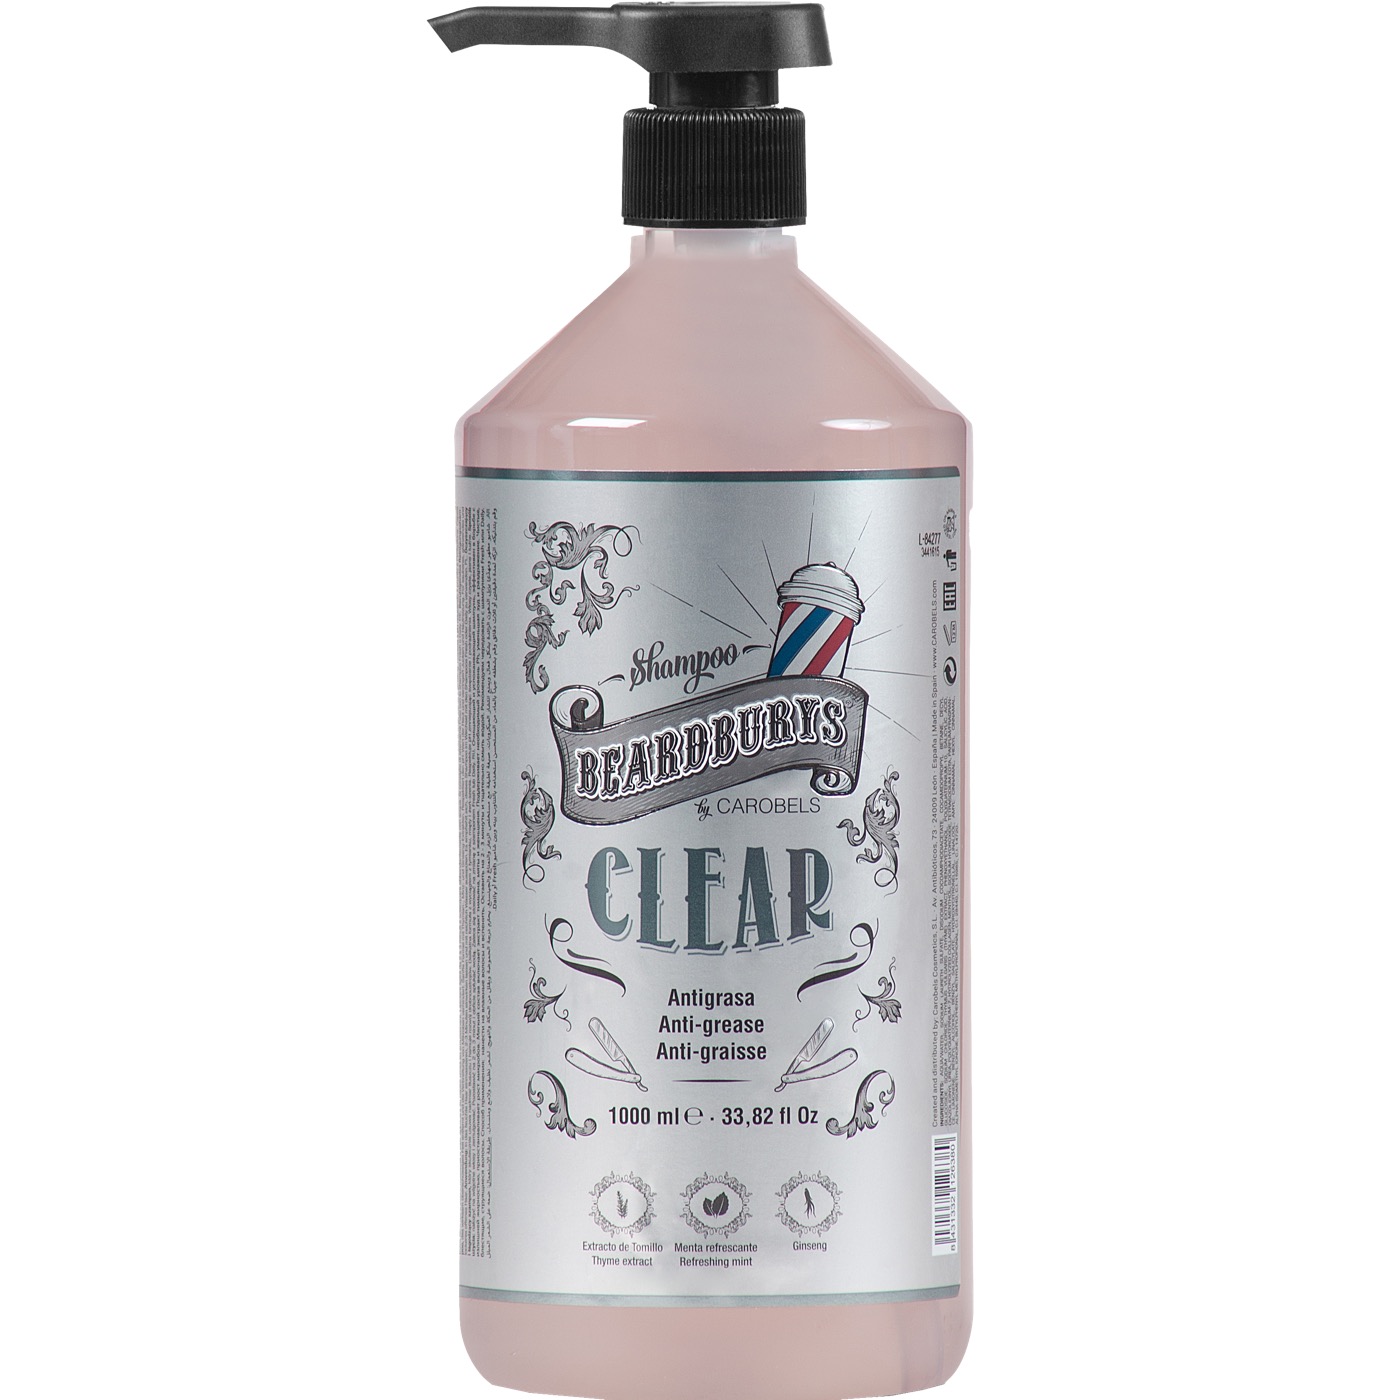 Beardburys Clear Shampoo 1000ml - 1.1 - BB-0412638